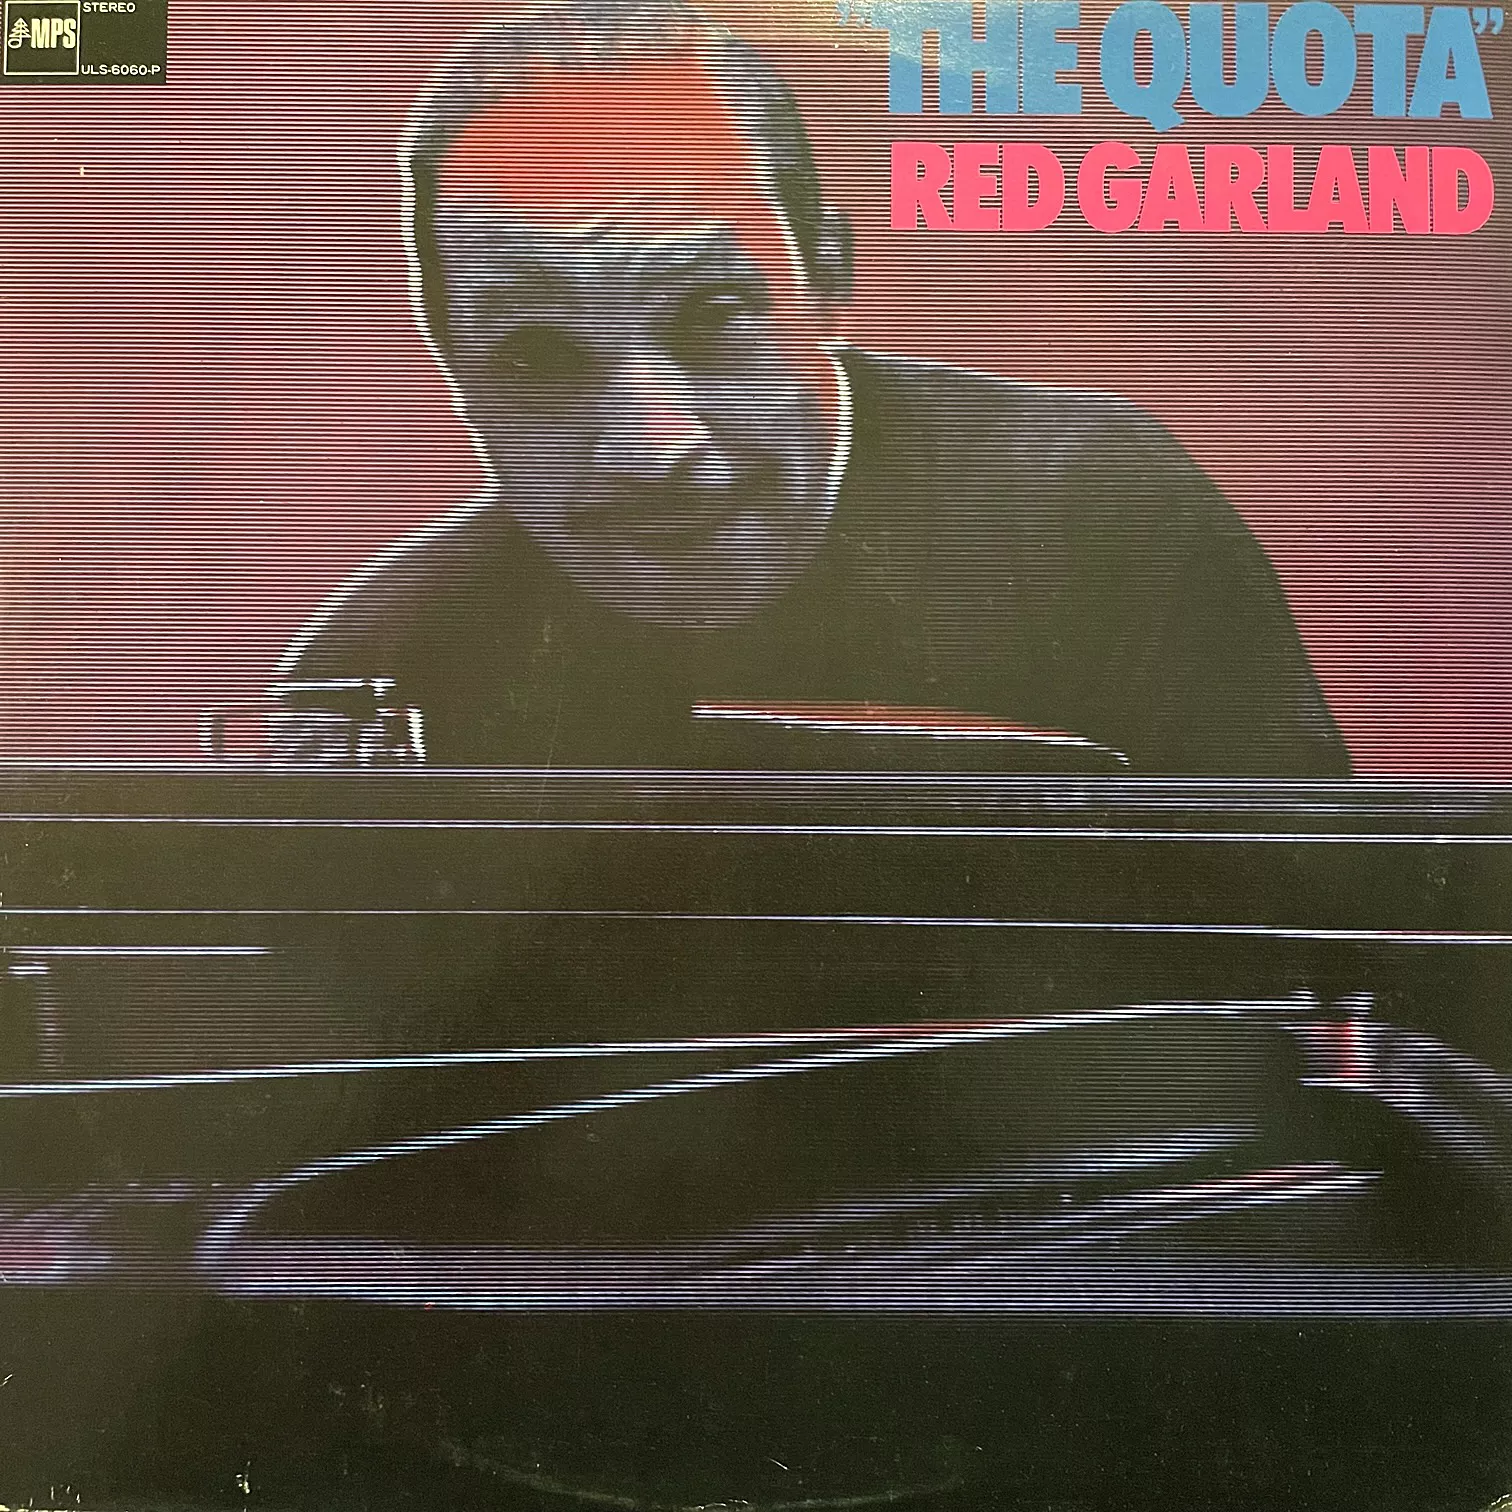 RED GARLAND / QUOTA